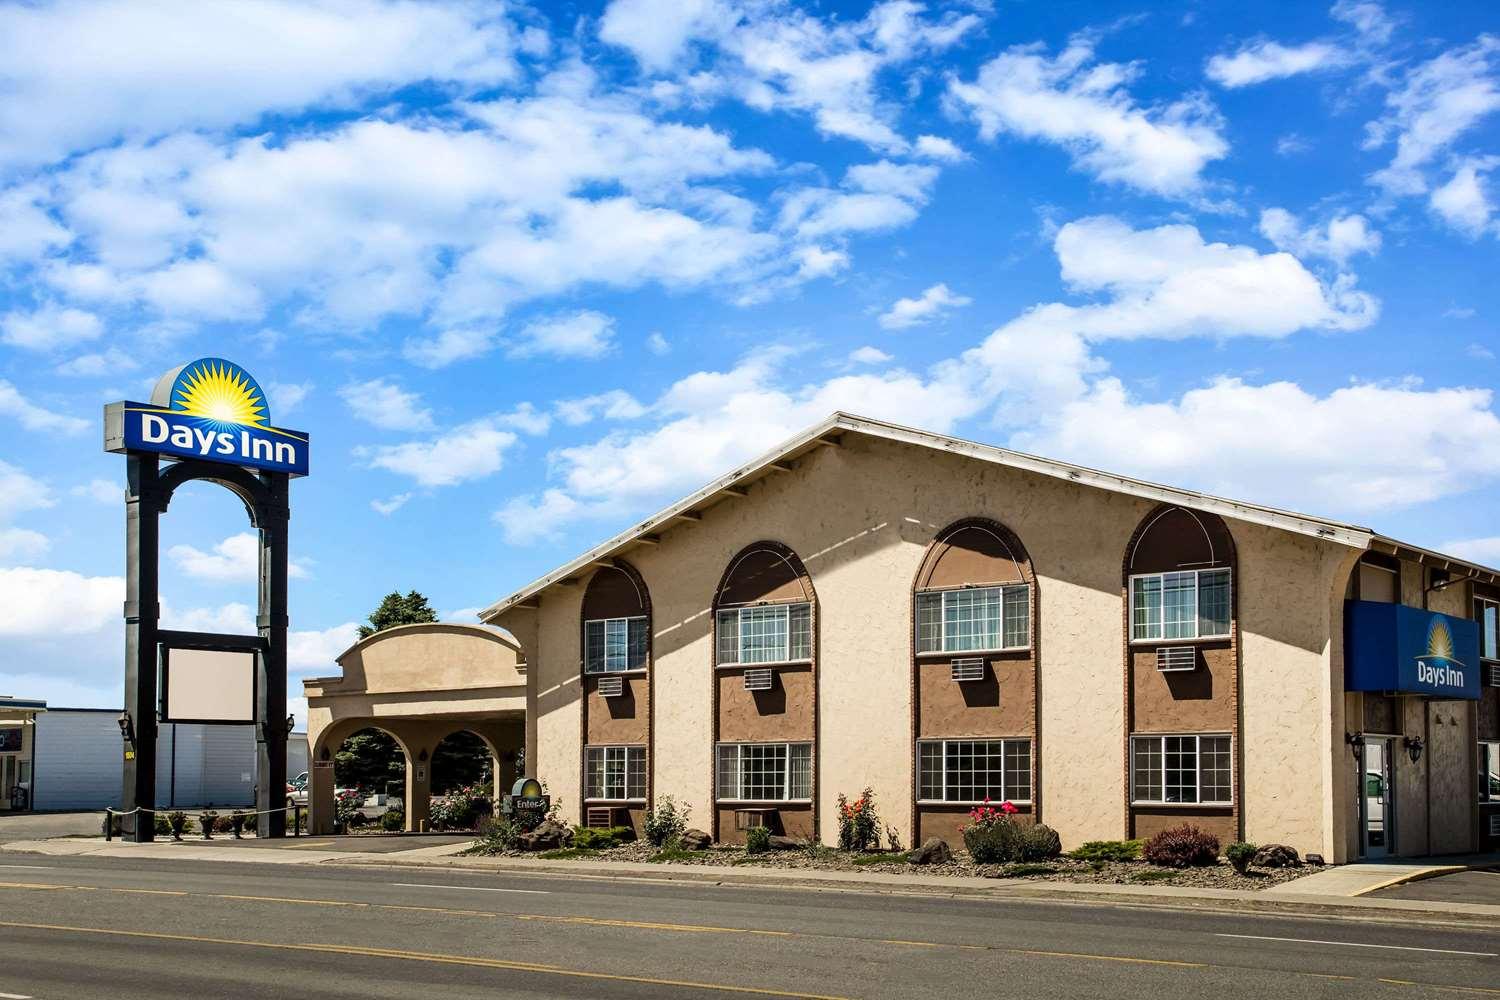 Days Inn by Wyndham Yakima in Yakima, WA